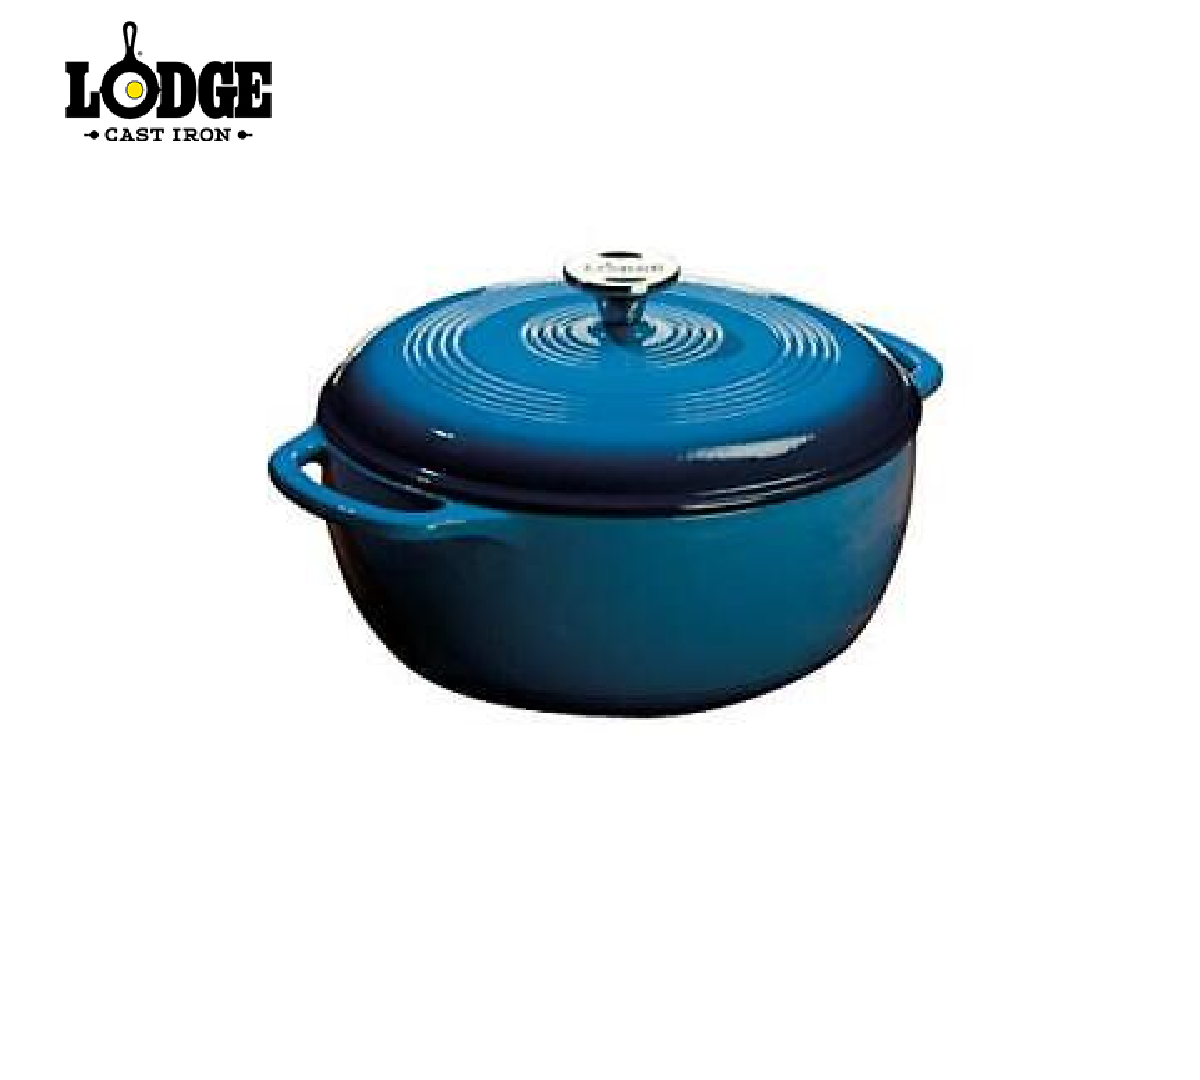 Lodge 6 Quart Enameled Cast Iron Dutch Oven Blue